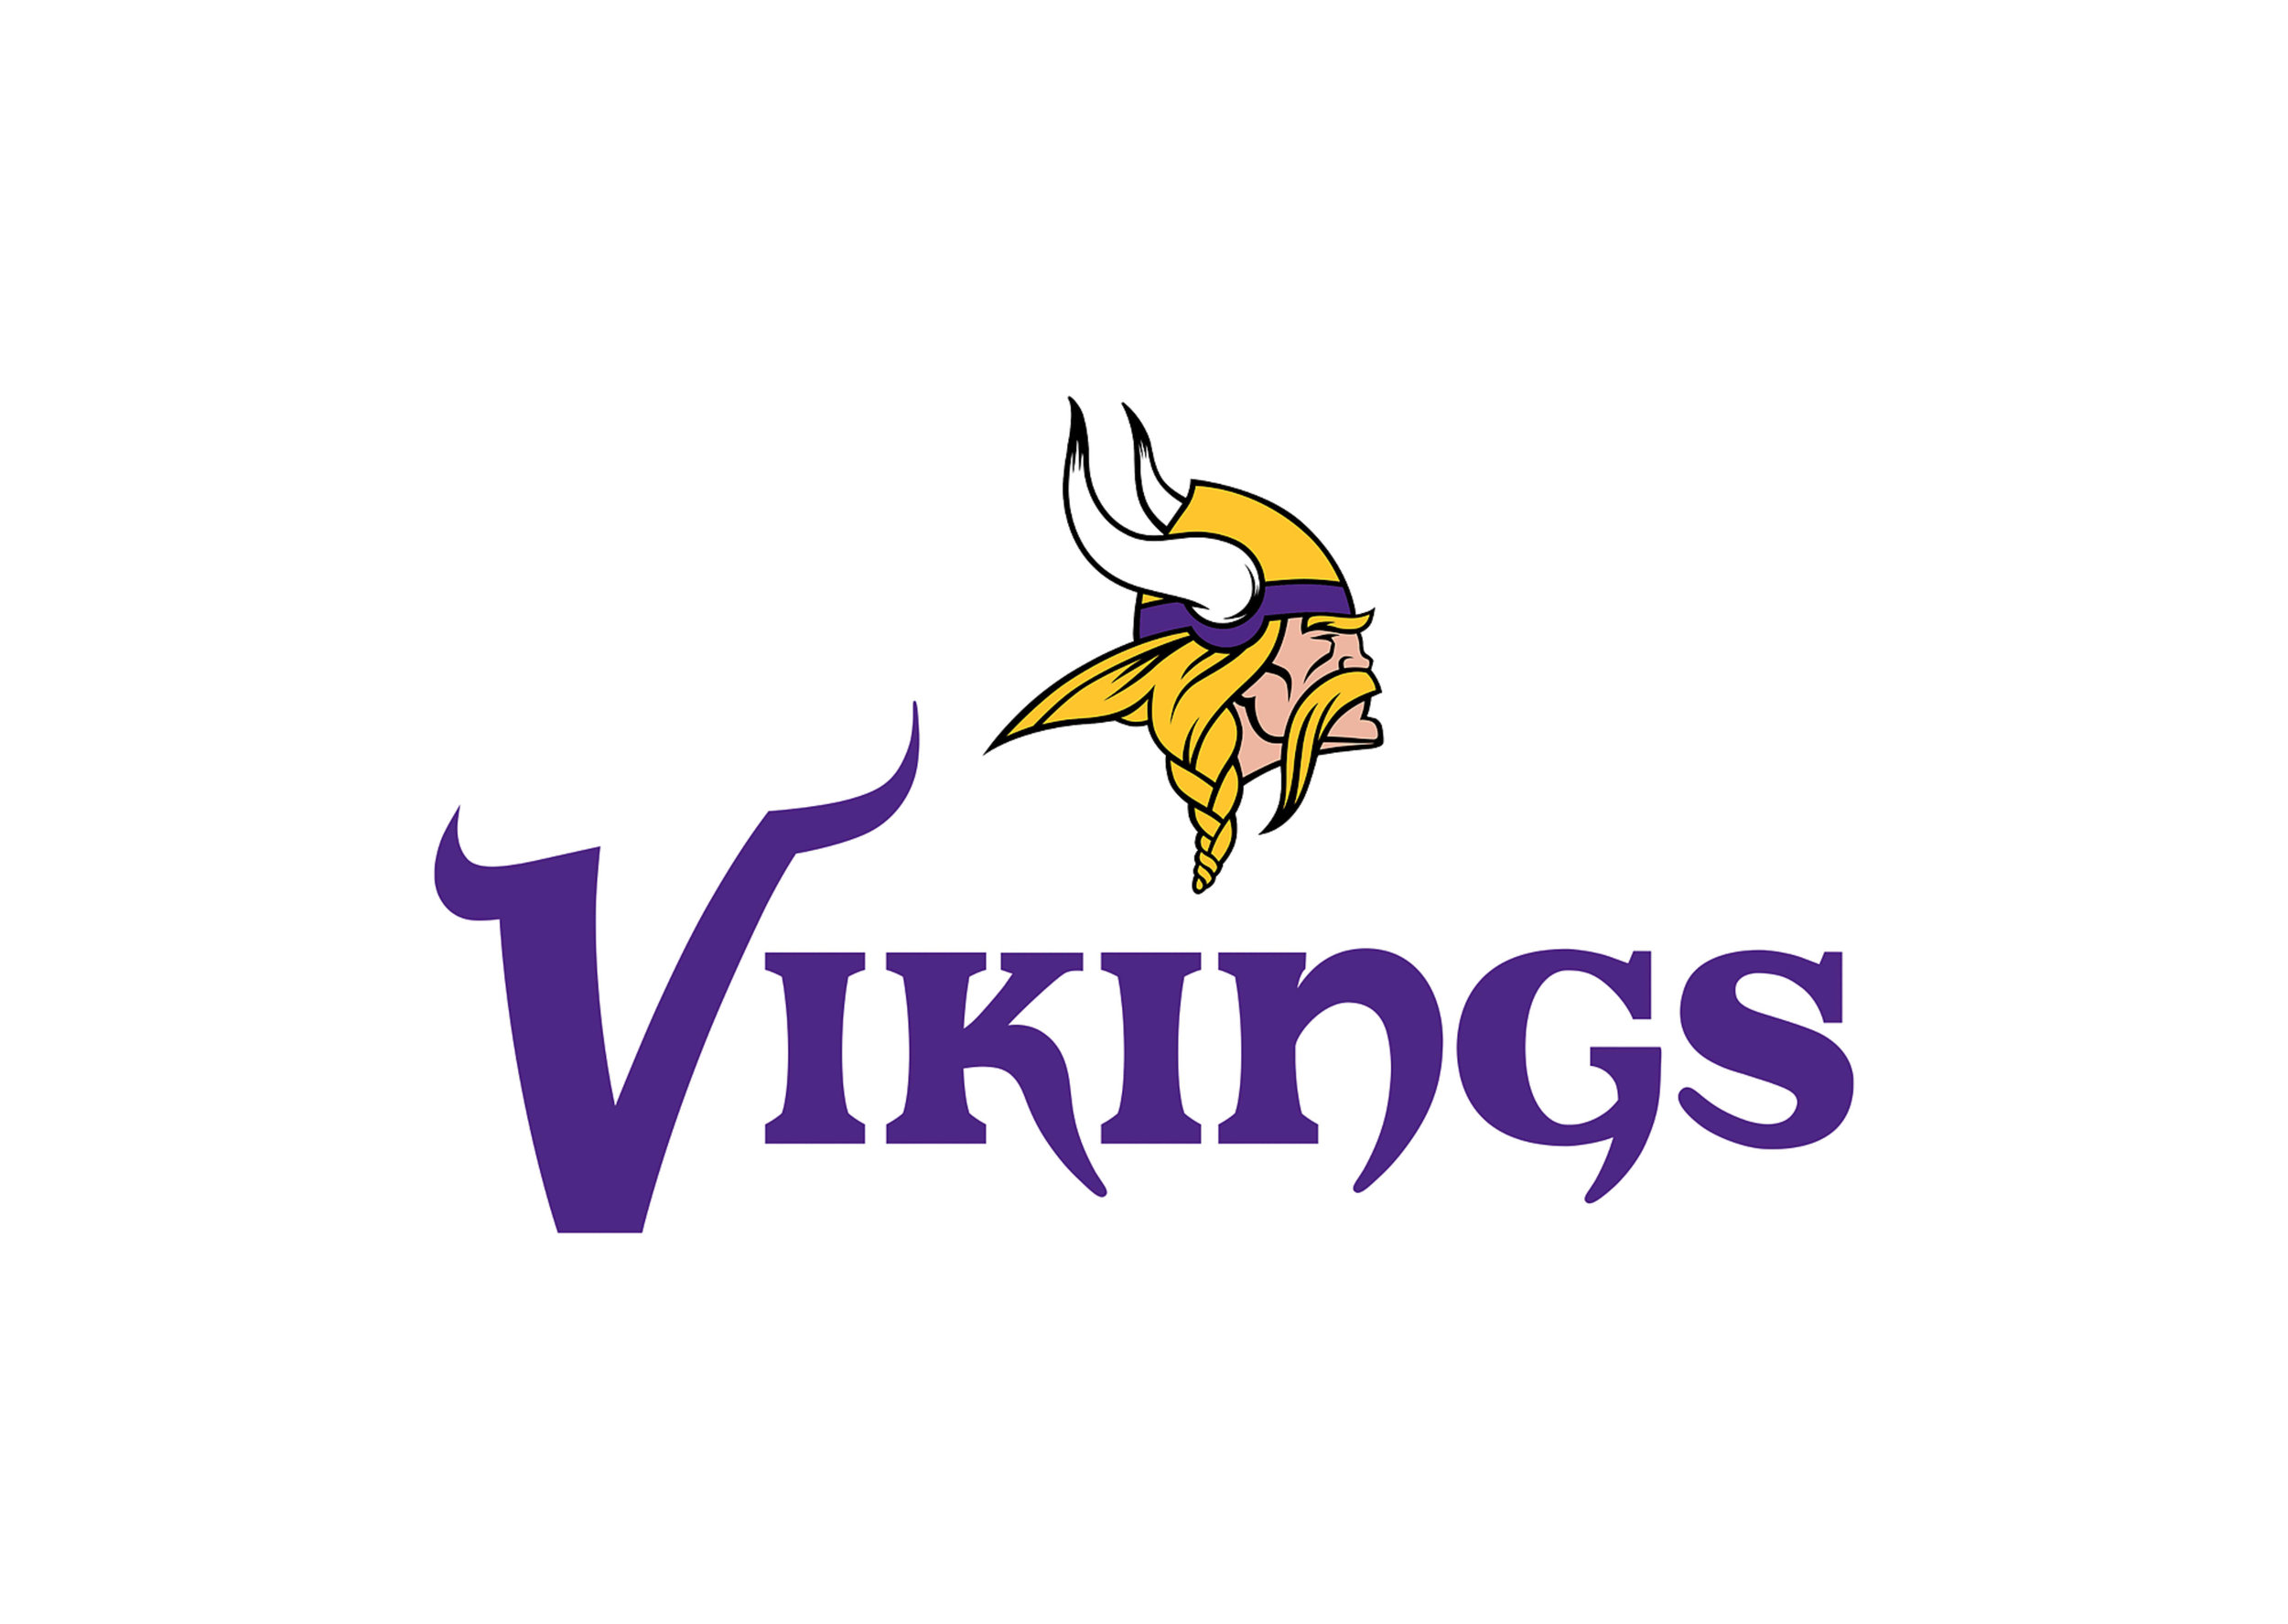 Vikings logo.jpg